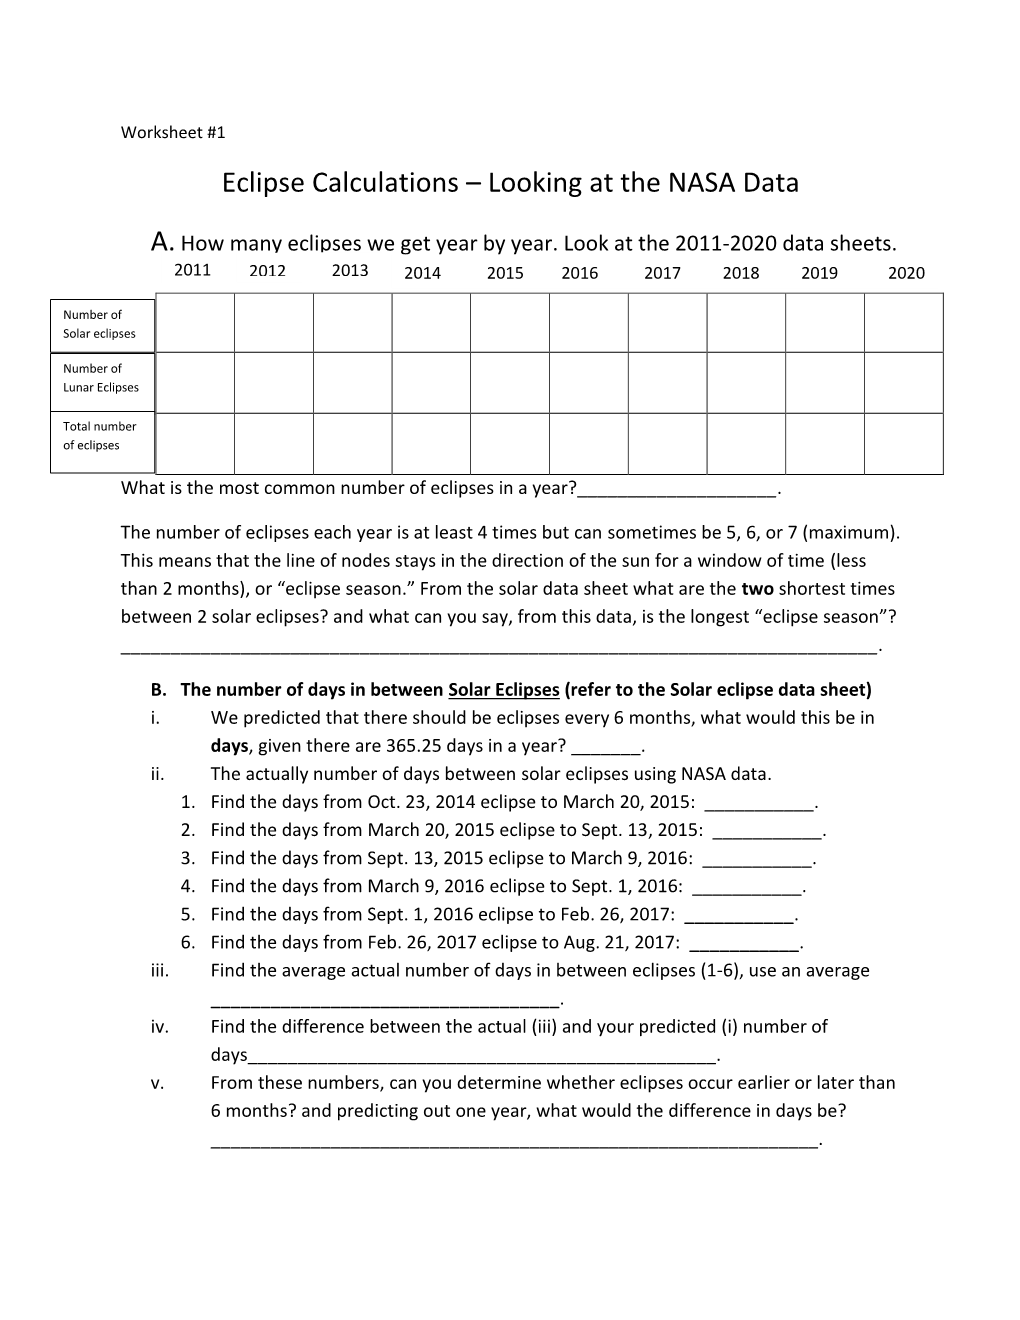 Eclipse Calculations – Looking at the NASA Data